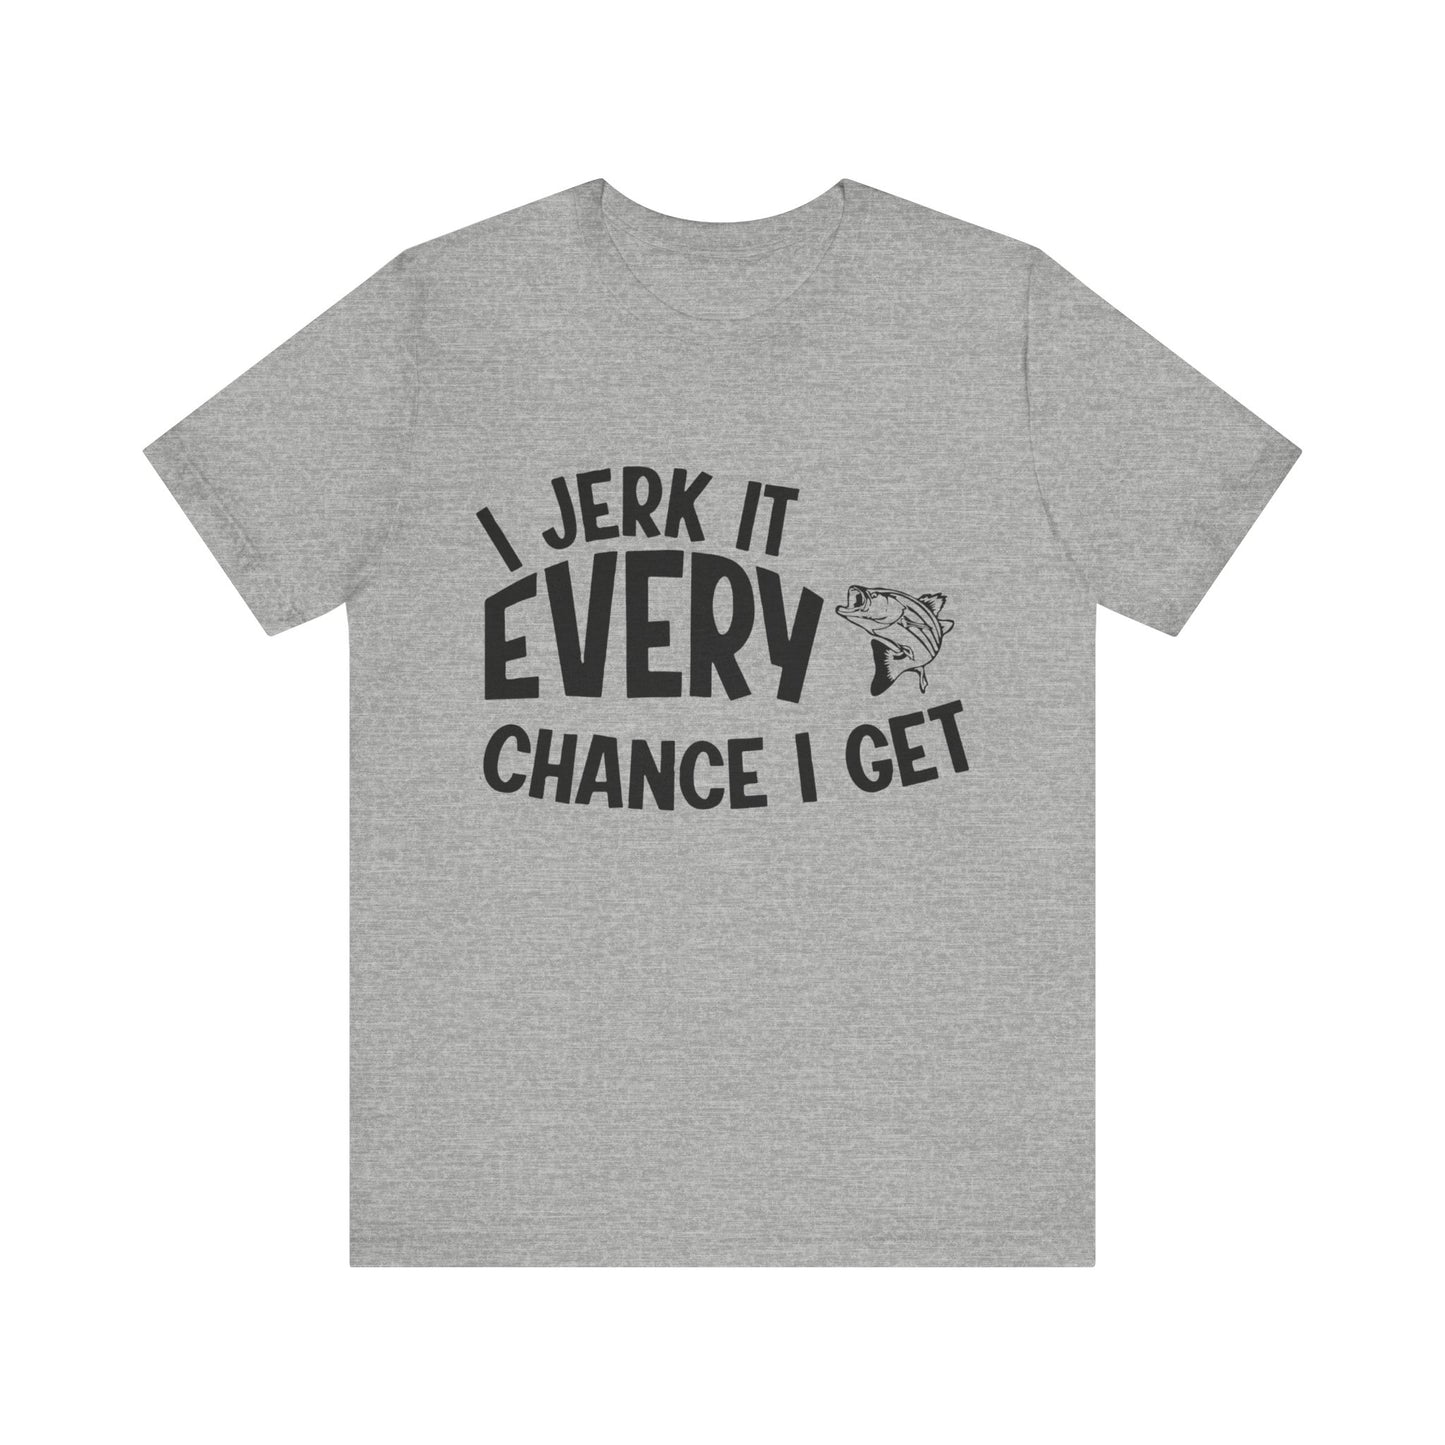 I jerk it every chance I get - Unisex T-Shirt